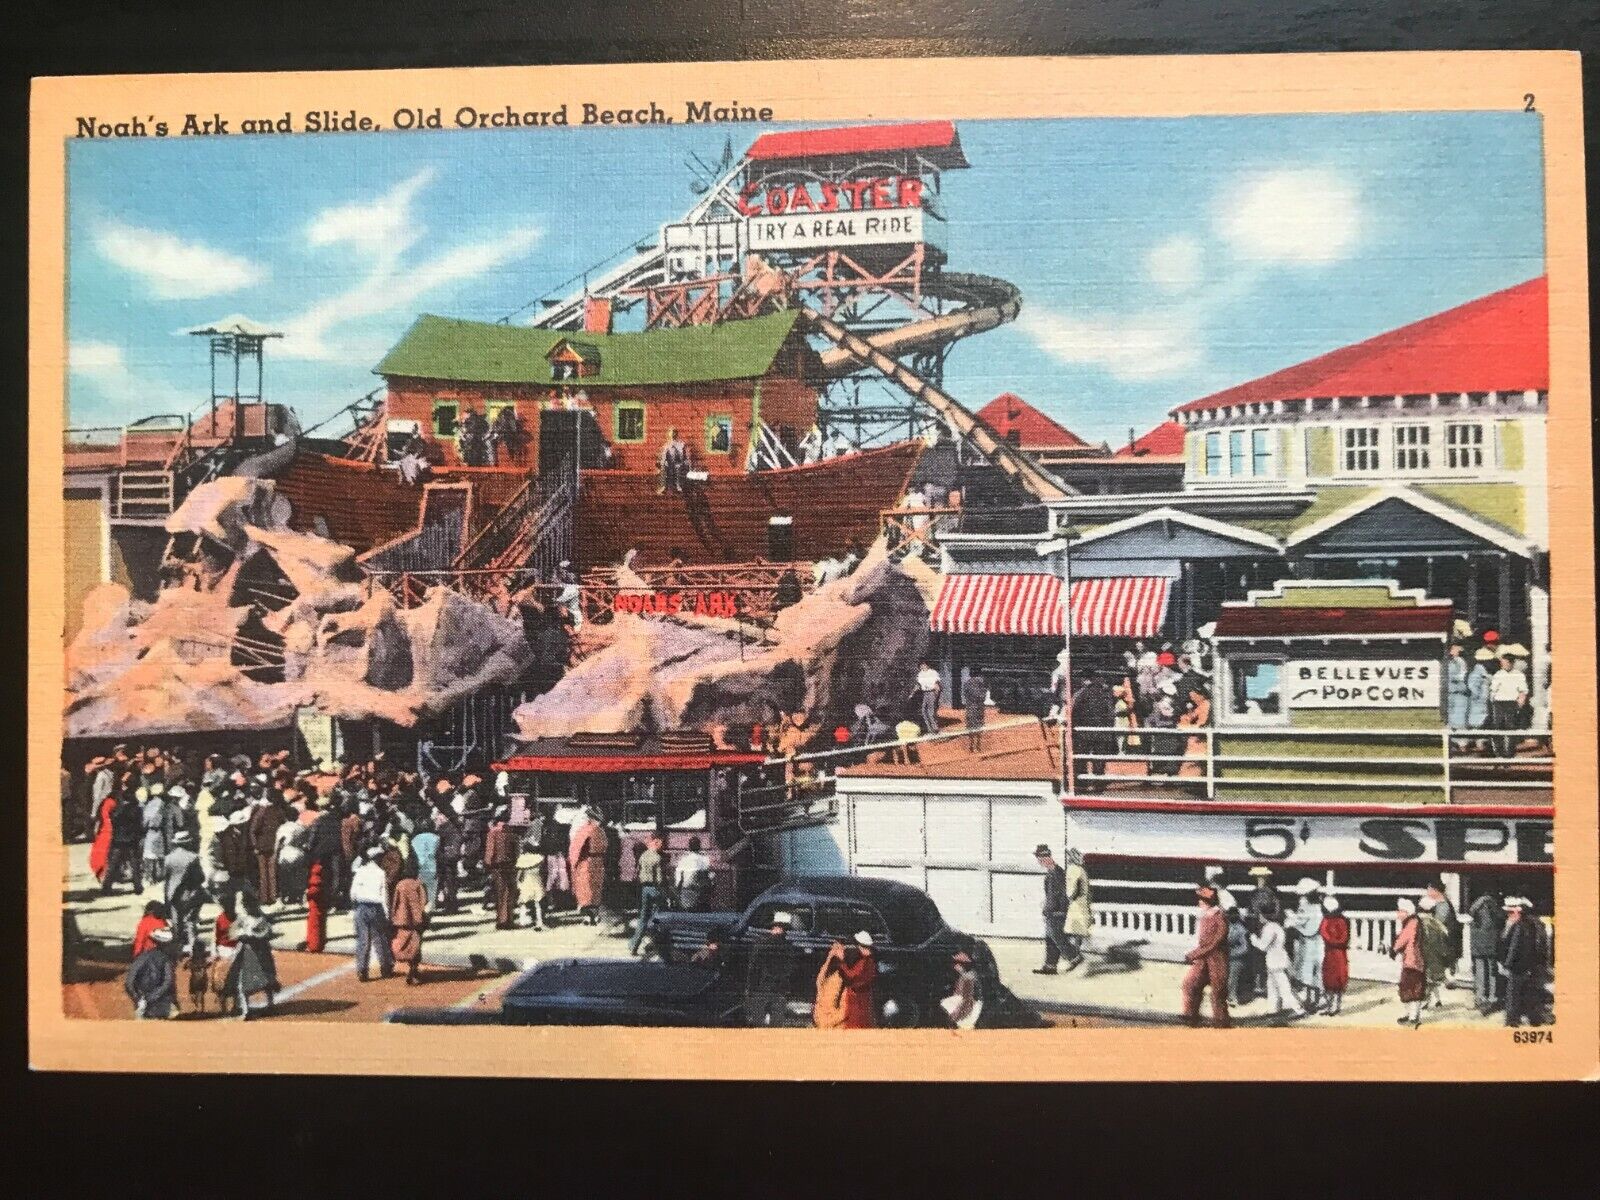 Vintage Postcard 1930-1945 Noah's Ark Slide Old Orchard Beach York Maine (ME)